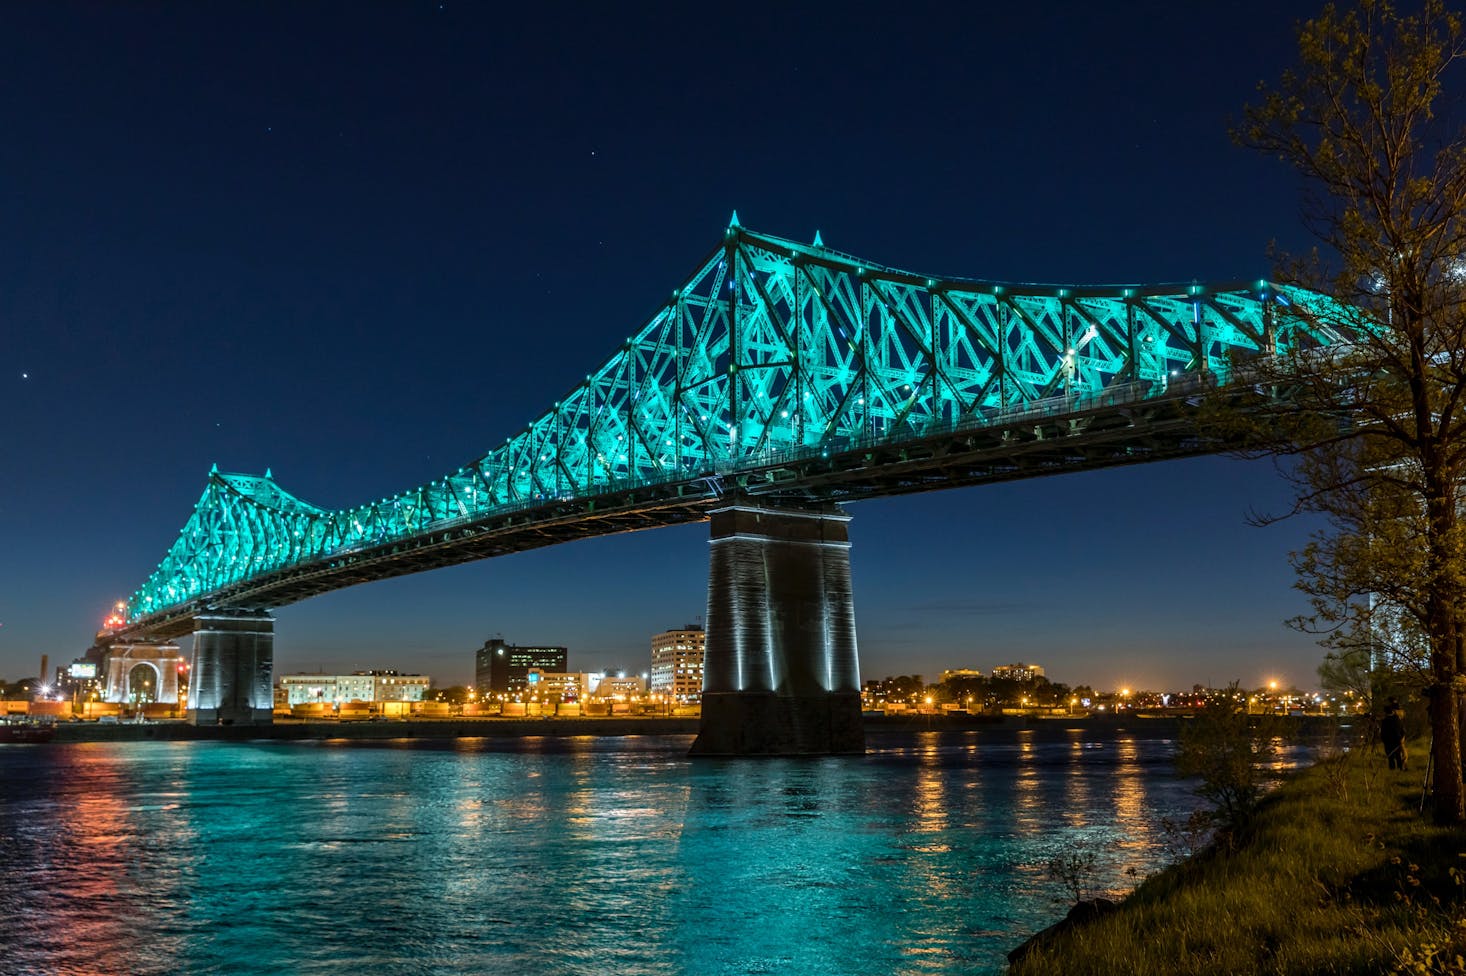 Jacques Cartier bridge at night